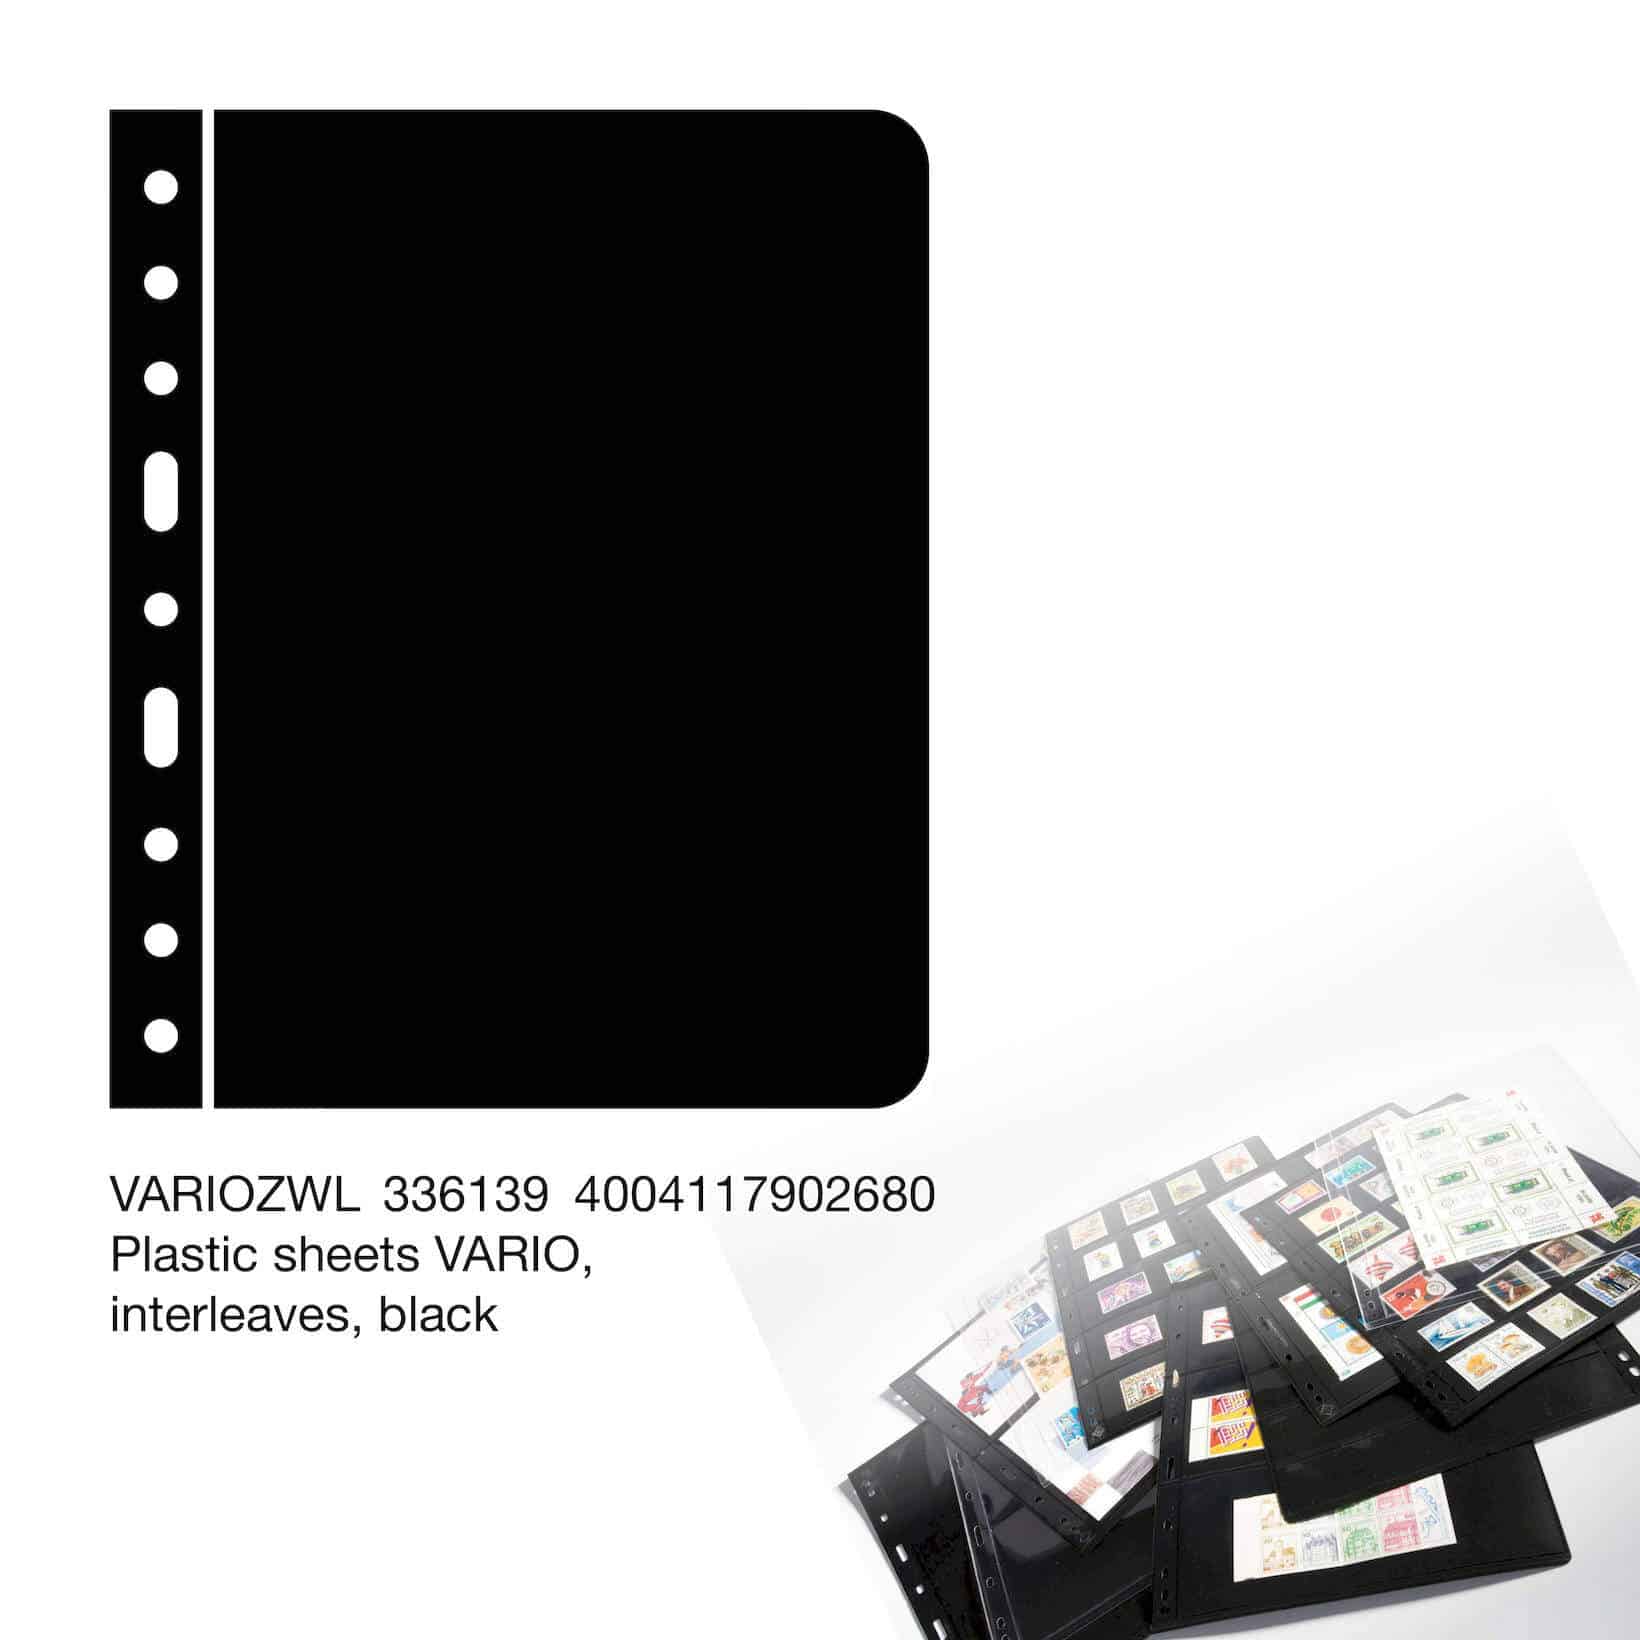 Plastic Sheets VARIO ZWL, Interleaves, Black